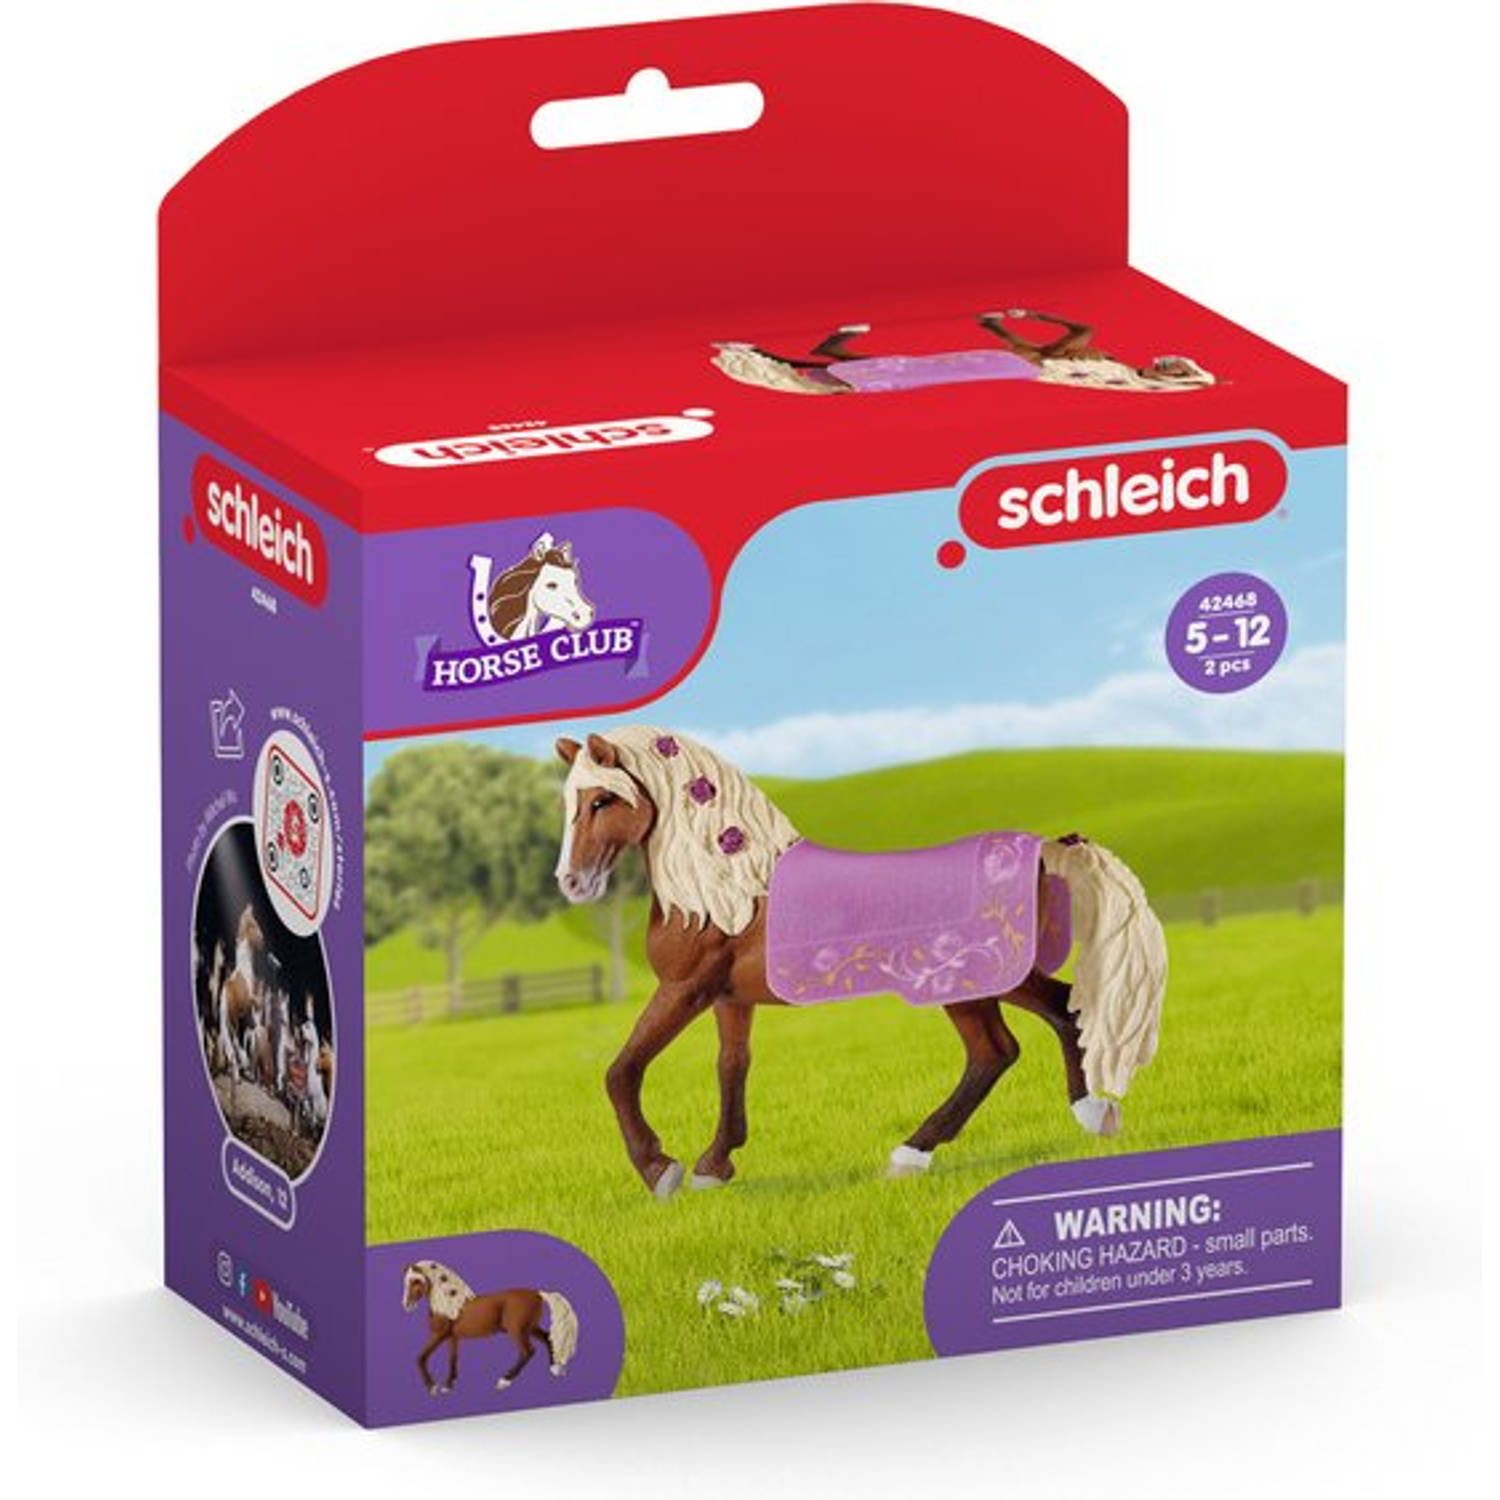 Schleich® Speelfiguur Horse Club, Paso Fino hengst paardenshow (42468) met afneembare paardendeken